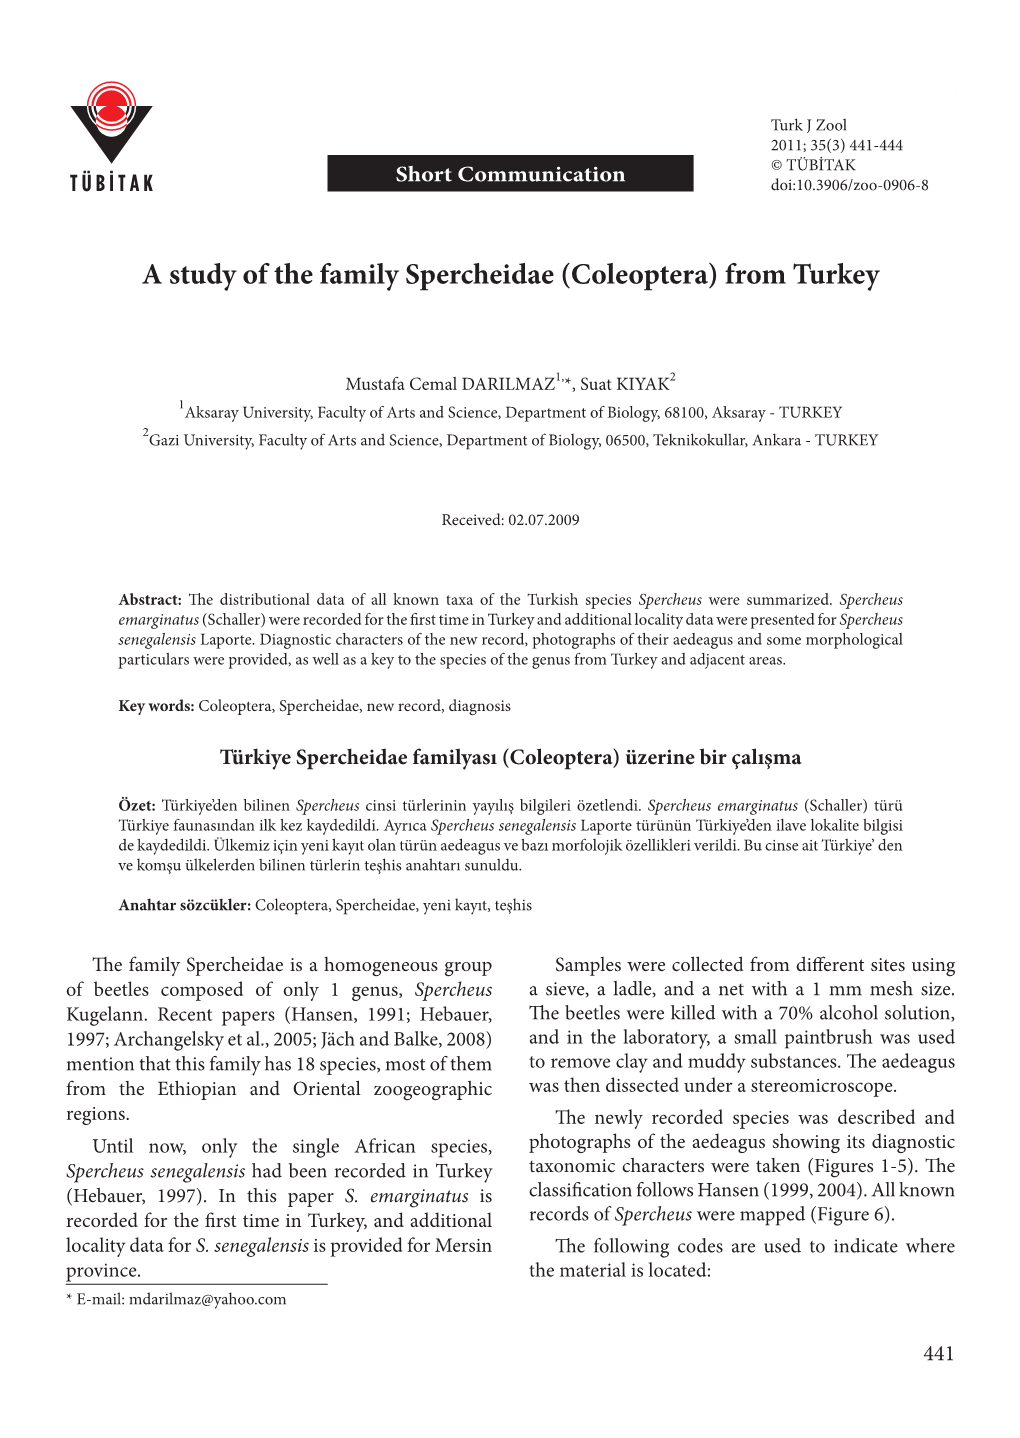 A Study of the Family Spercheidae (Coleoptera) from Turkey